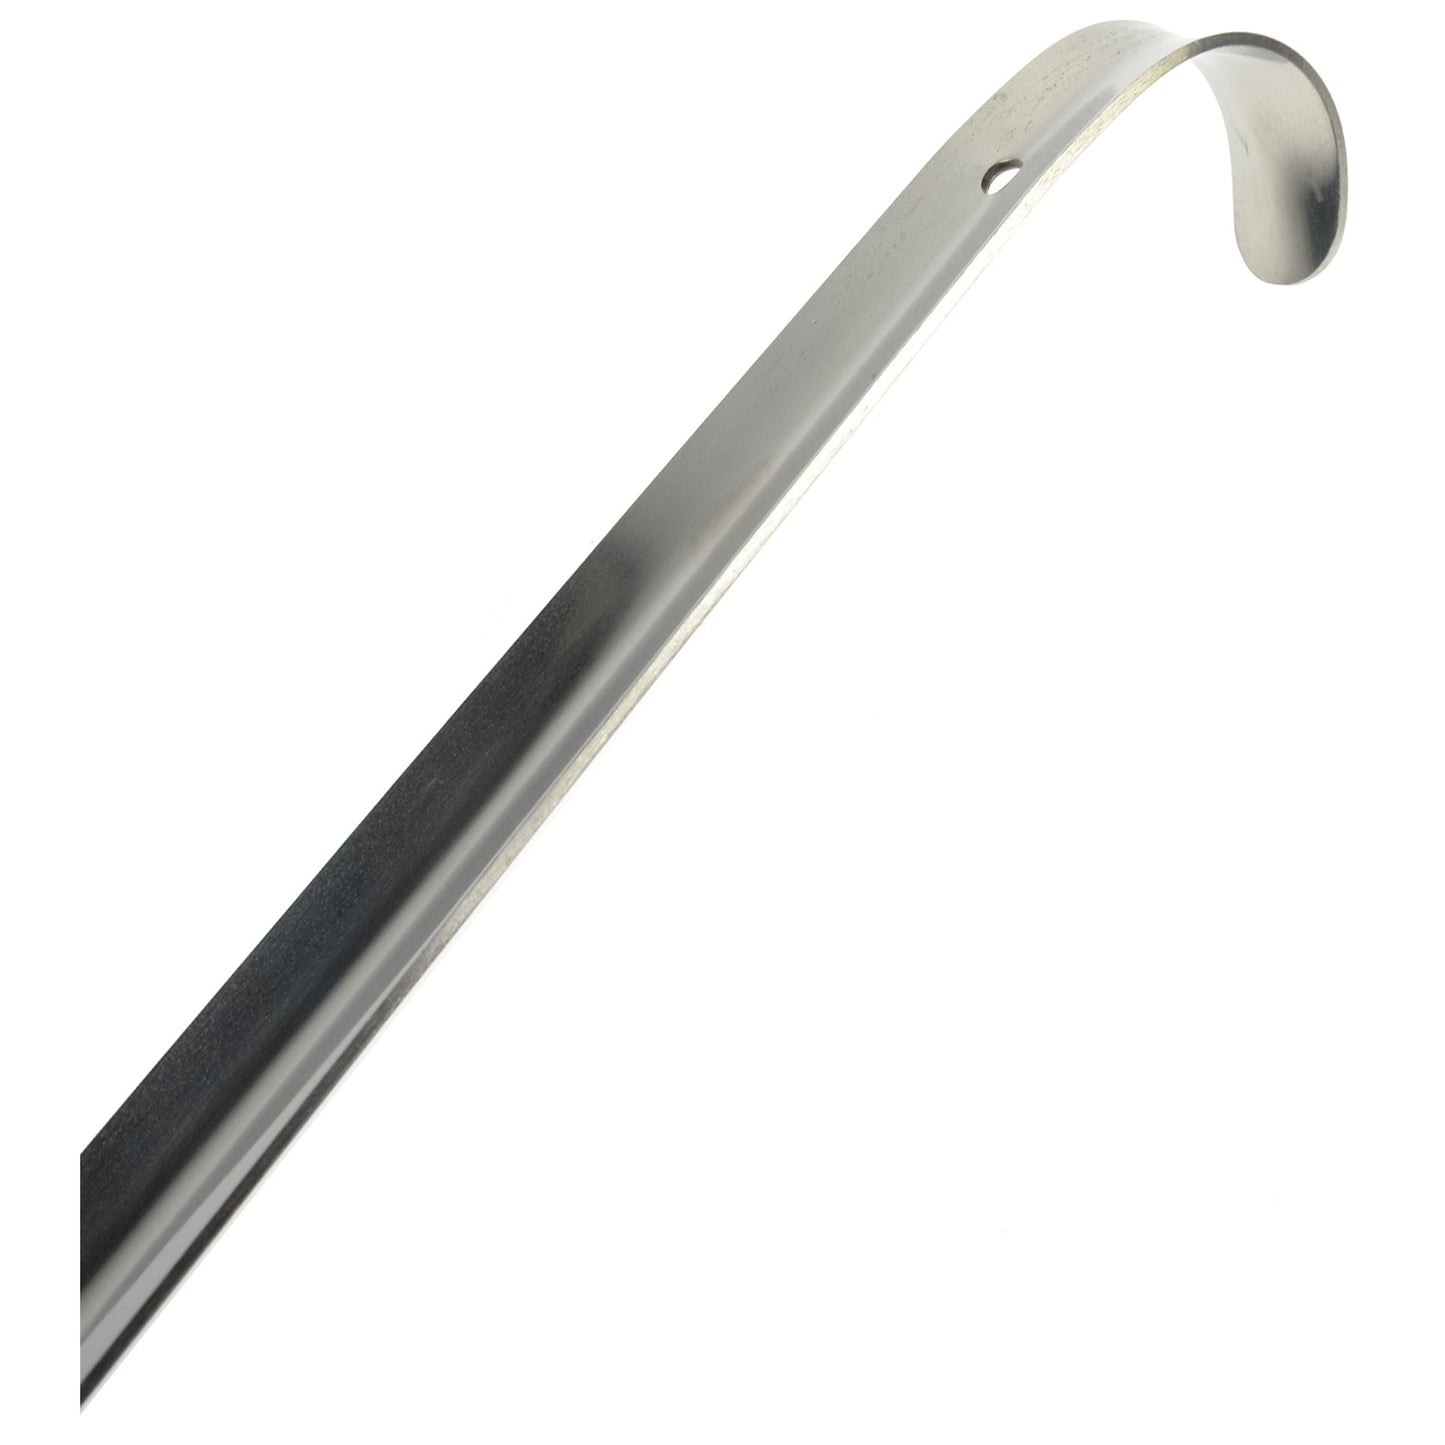 Metal Shoe Horn - 59cm Long